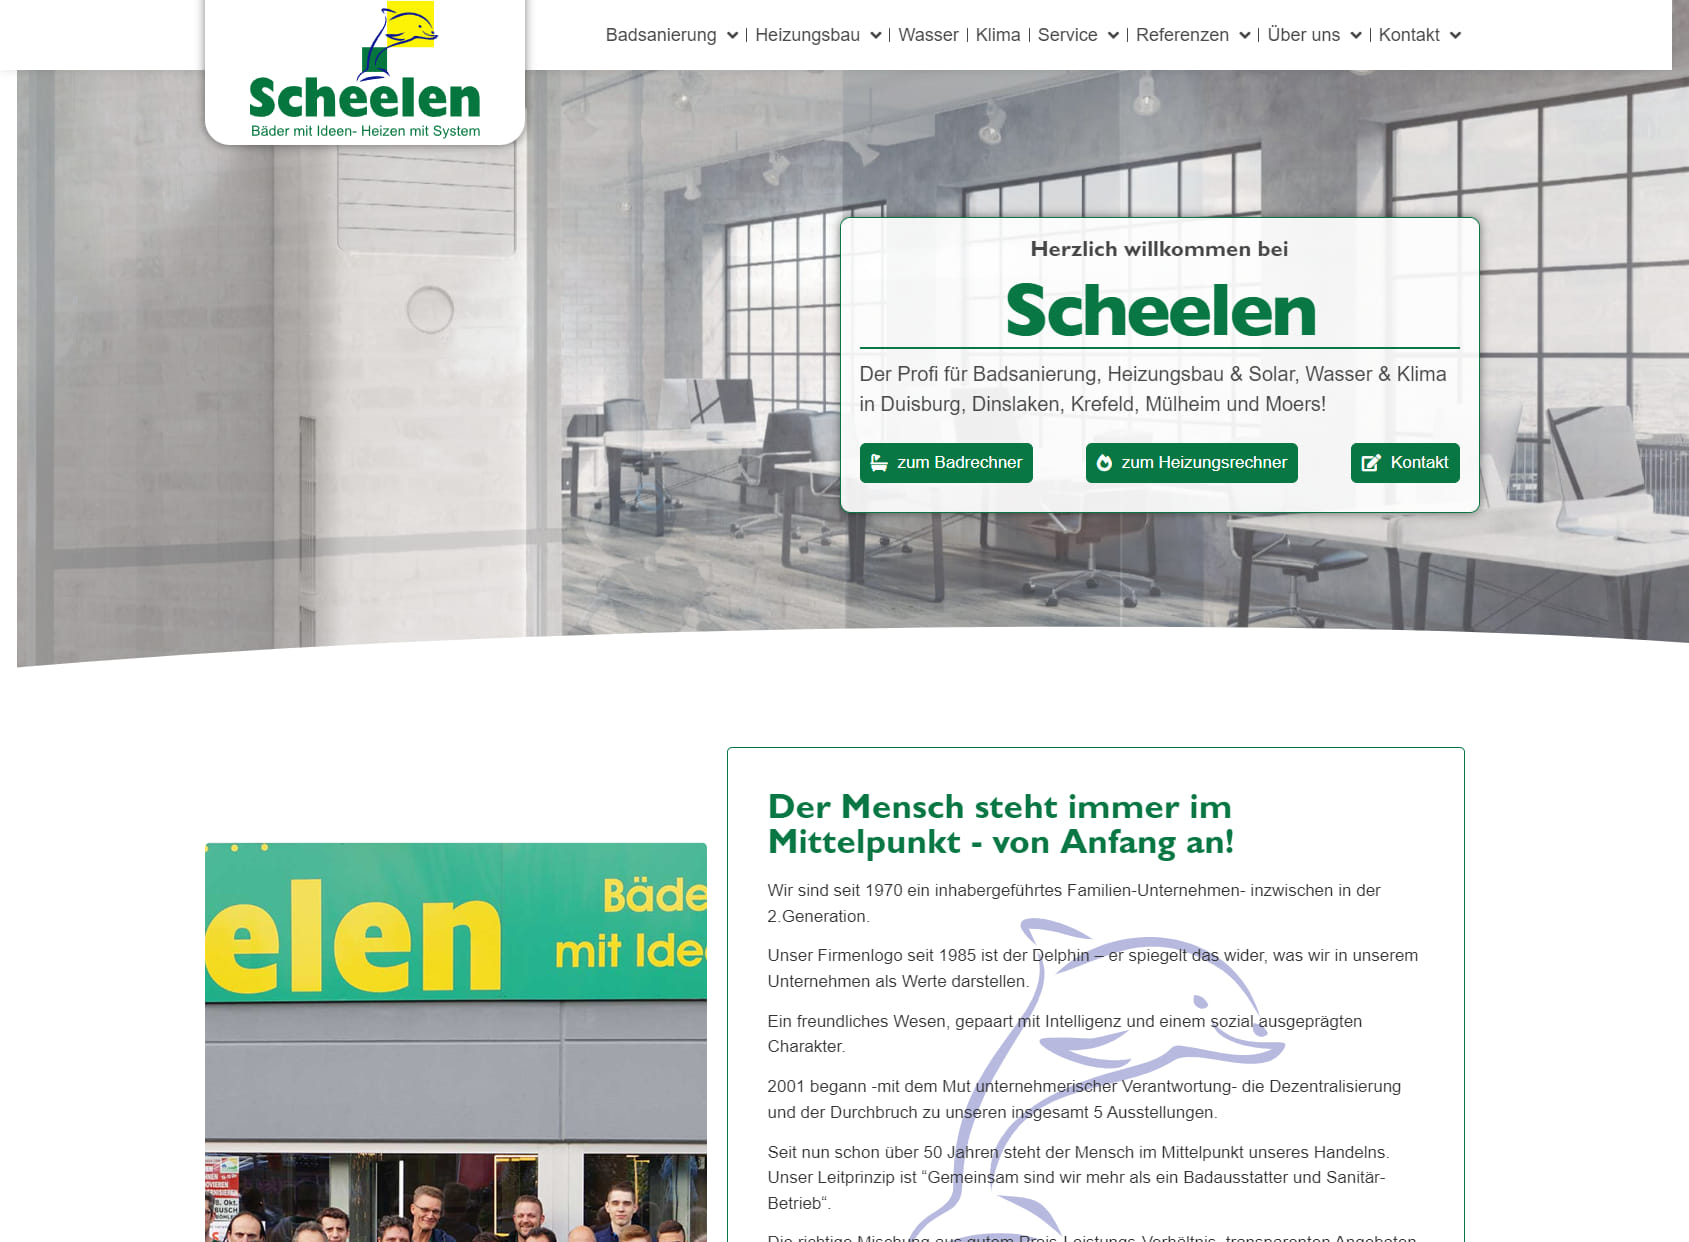 Scheelen GmbH Duisburg